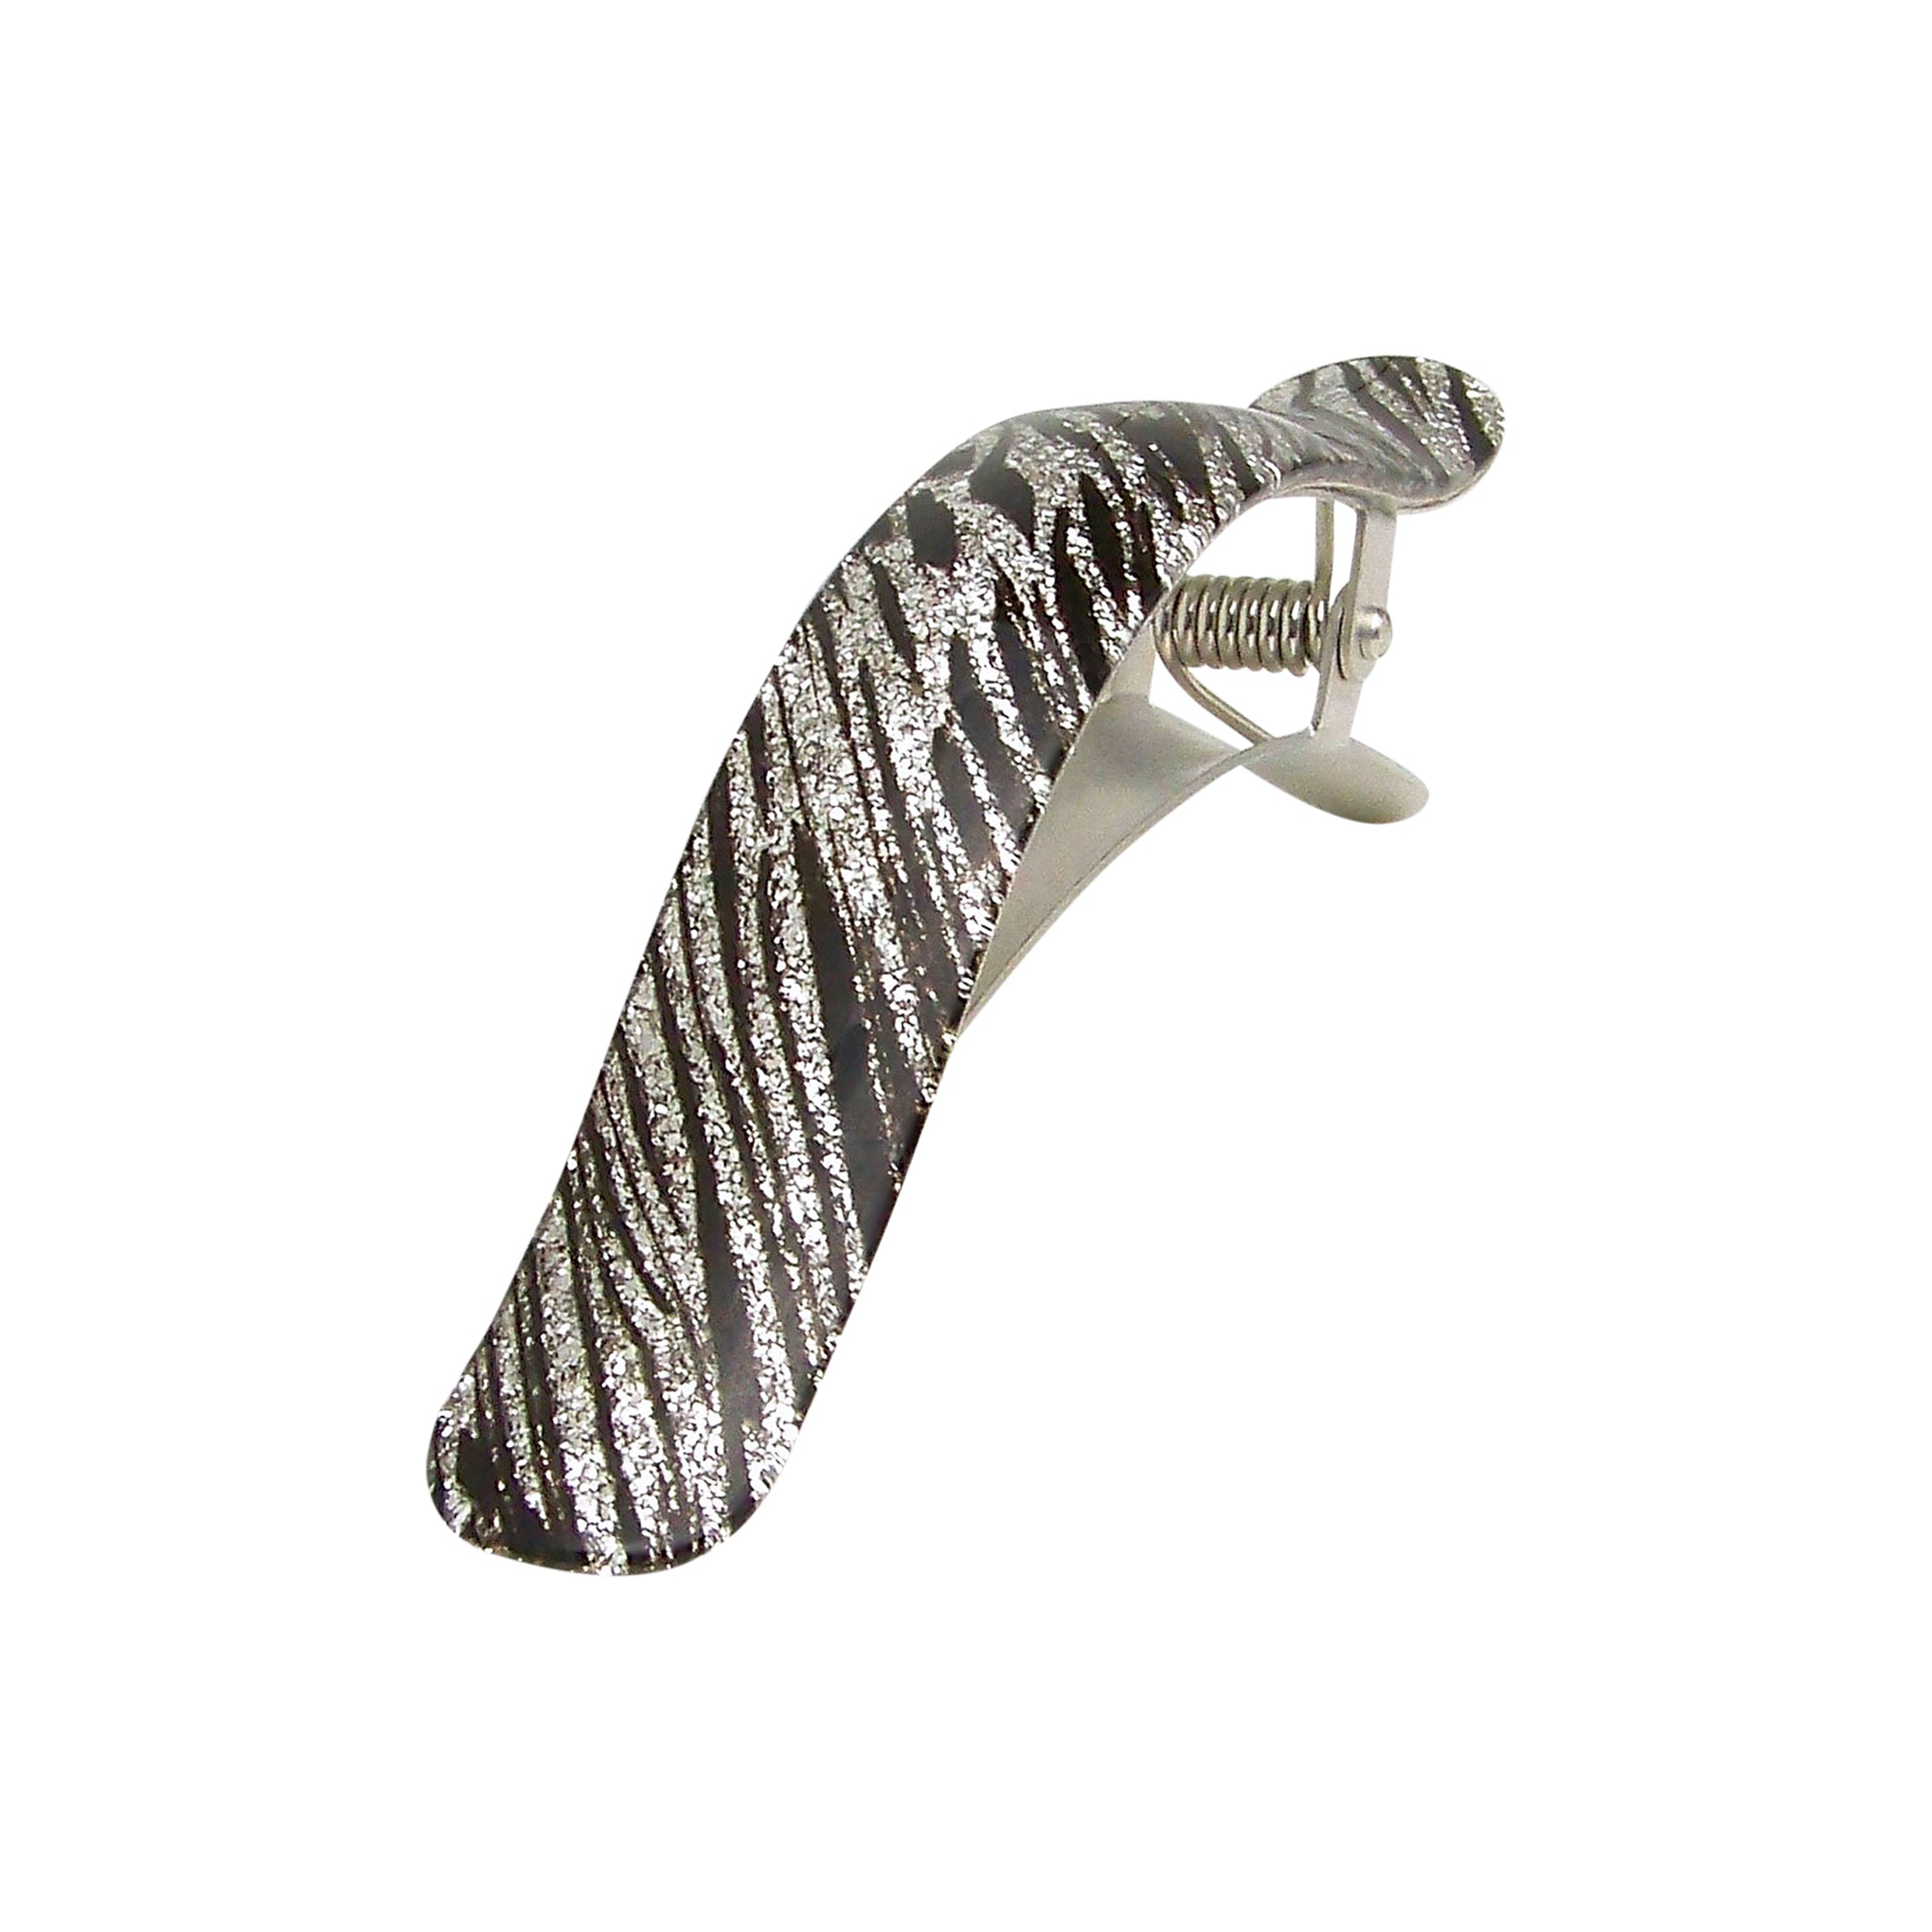 Ficcare Ficcarissimo Hair Clip in Glittery Zebra